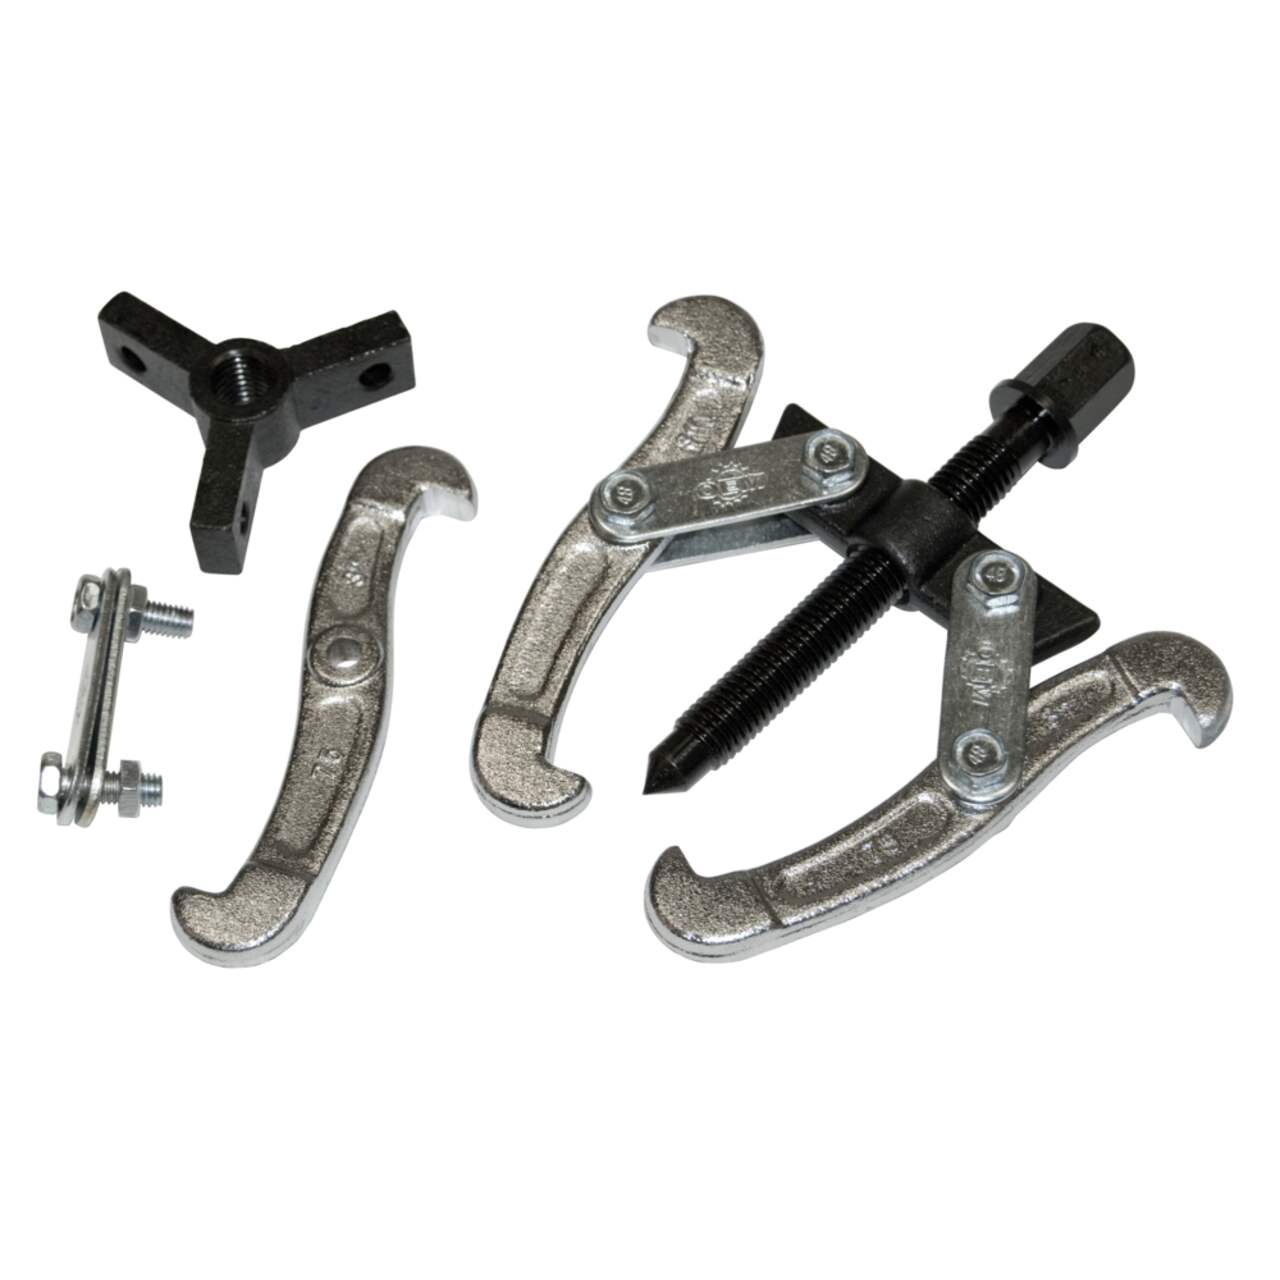 OEMTOOLS® 2/3-Jaw Puller Kit Adjustable & Reversible, 4-in, 44903